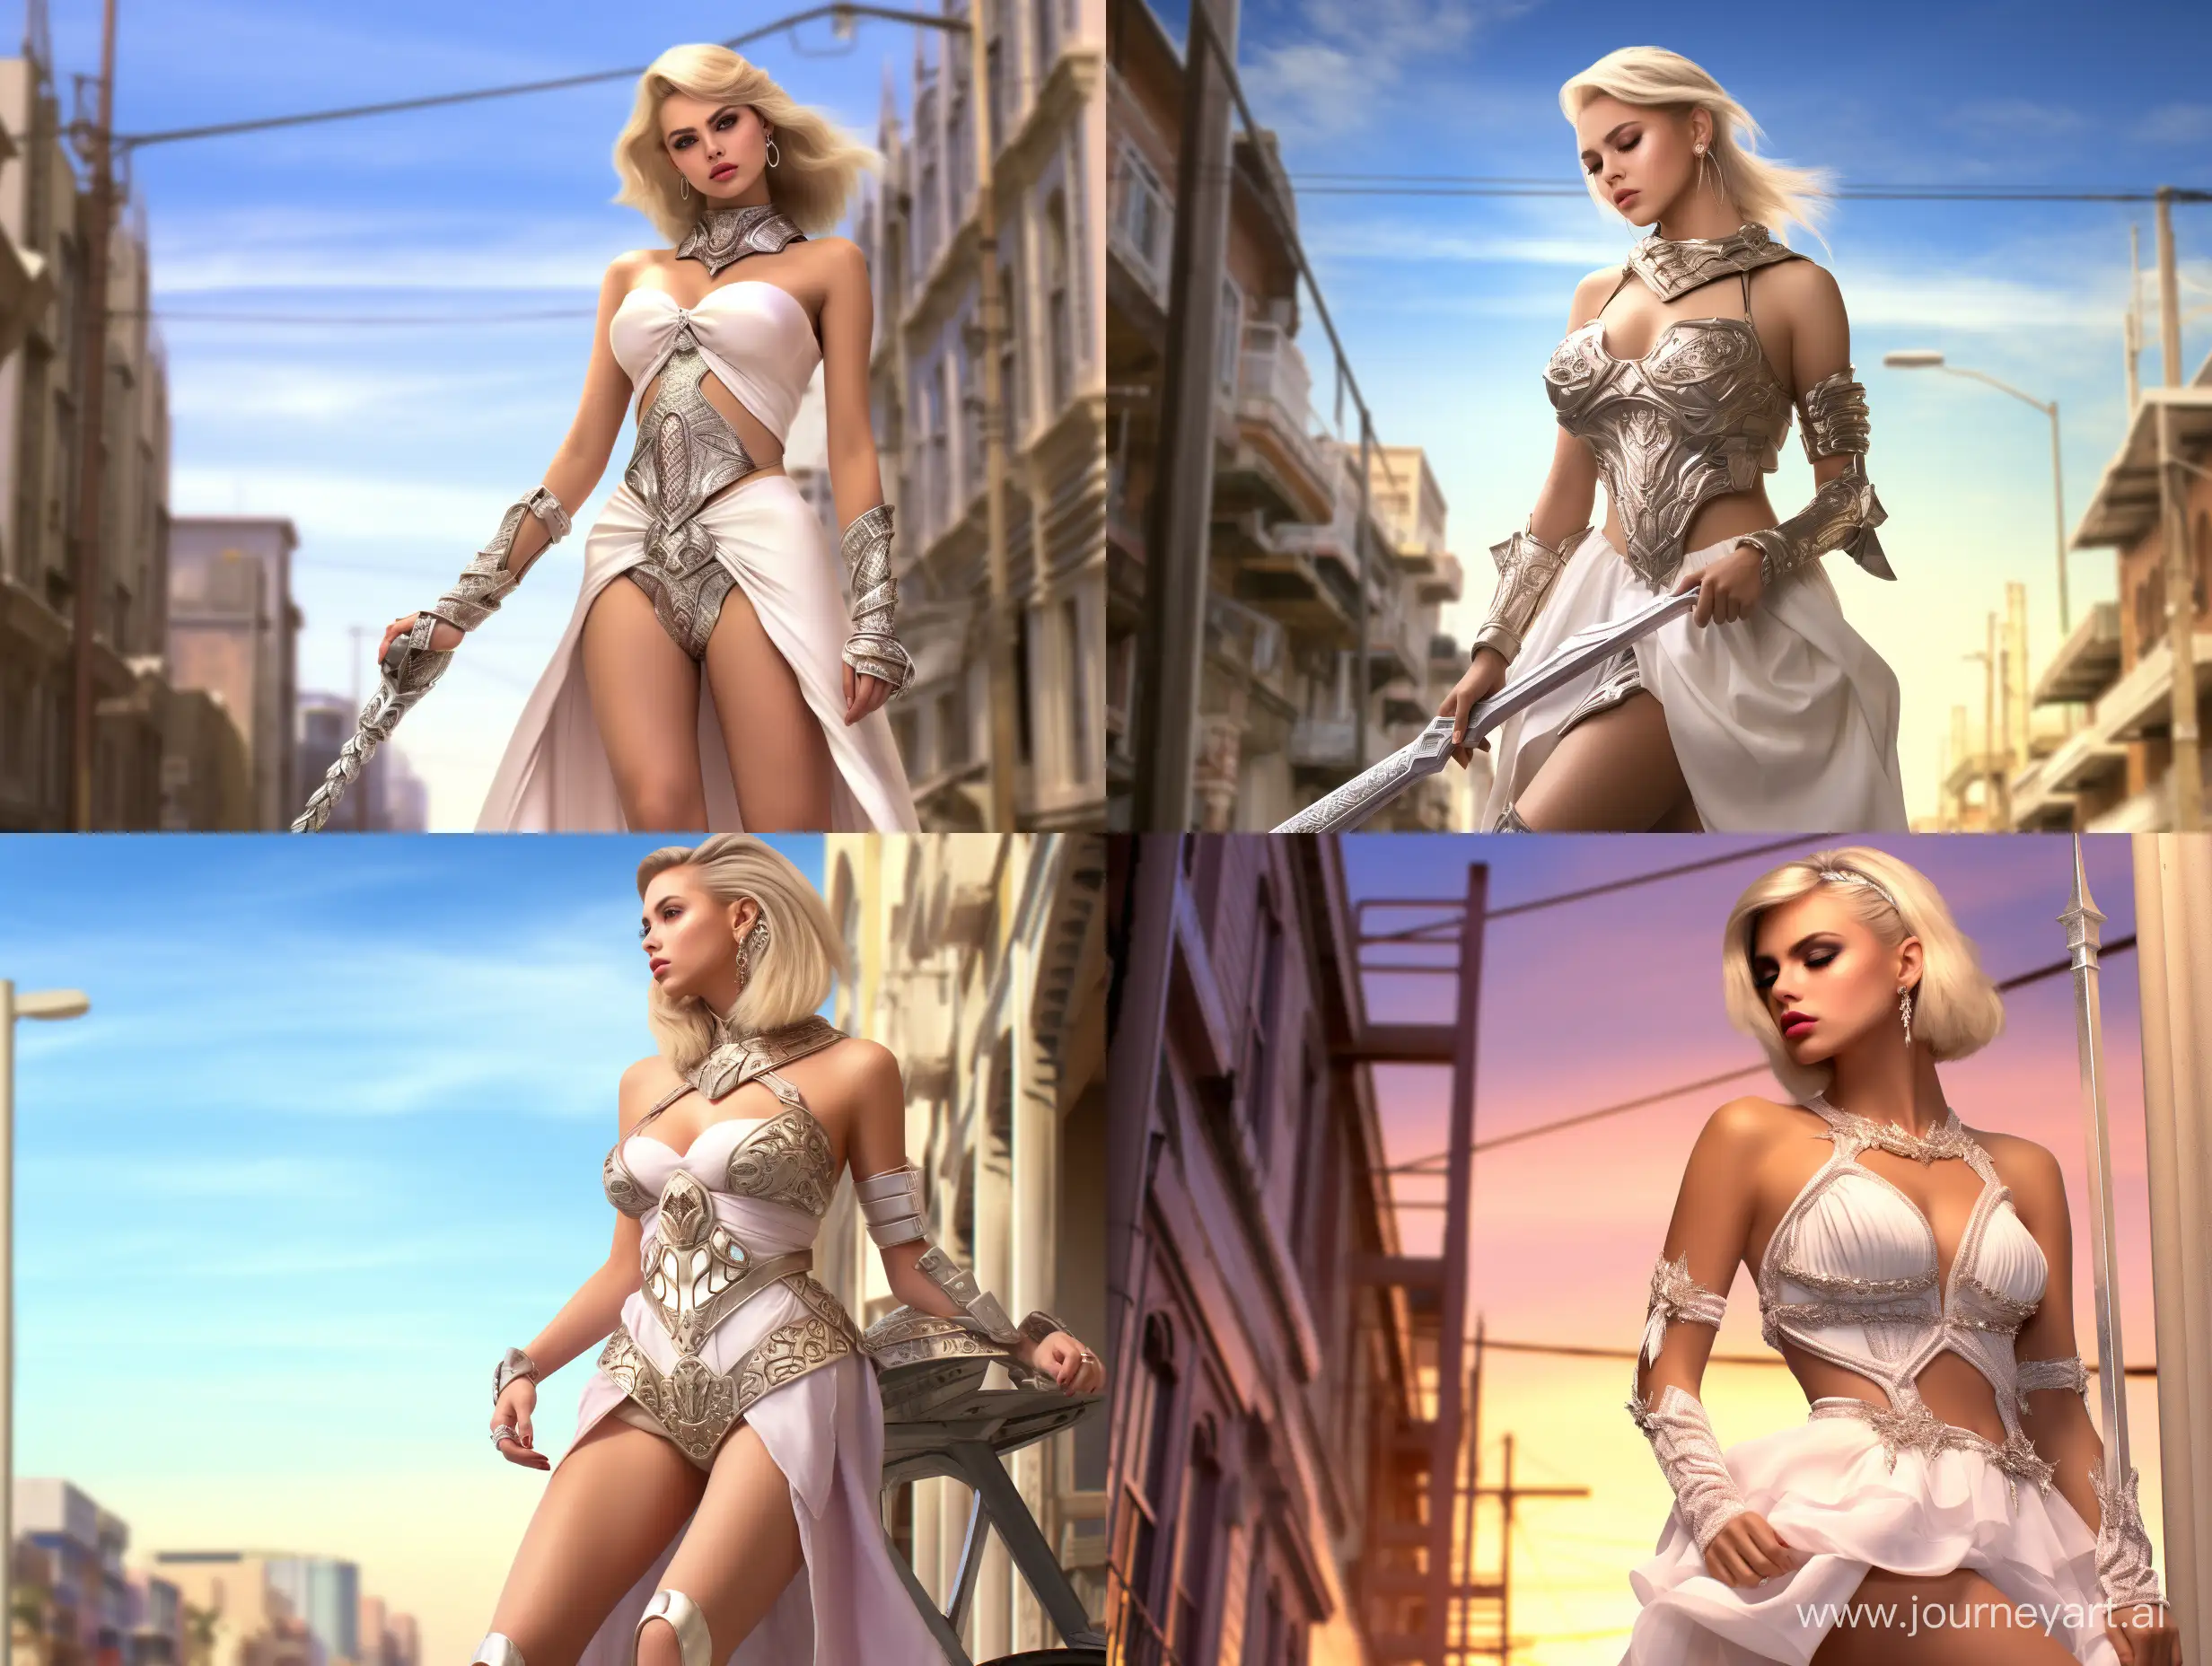 Stylish-Platinum-Blonde-Woman-in-Gladiator-High-Heels-and-White-Strapless-Dress